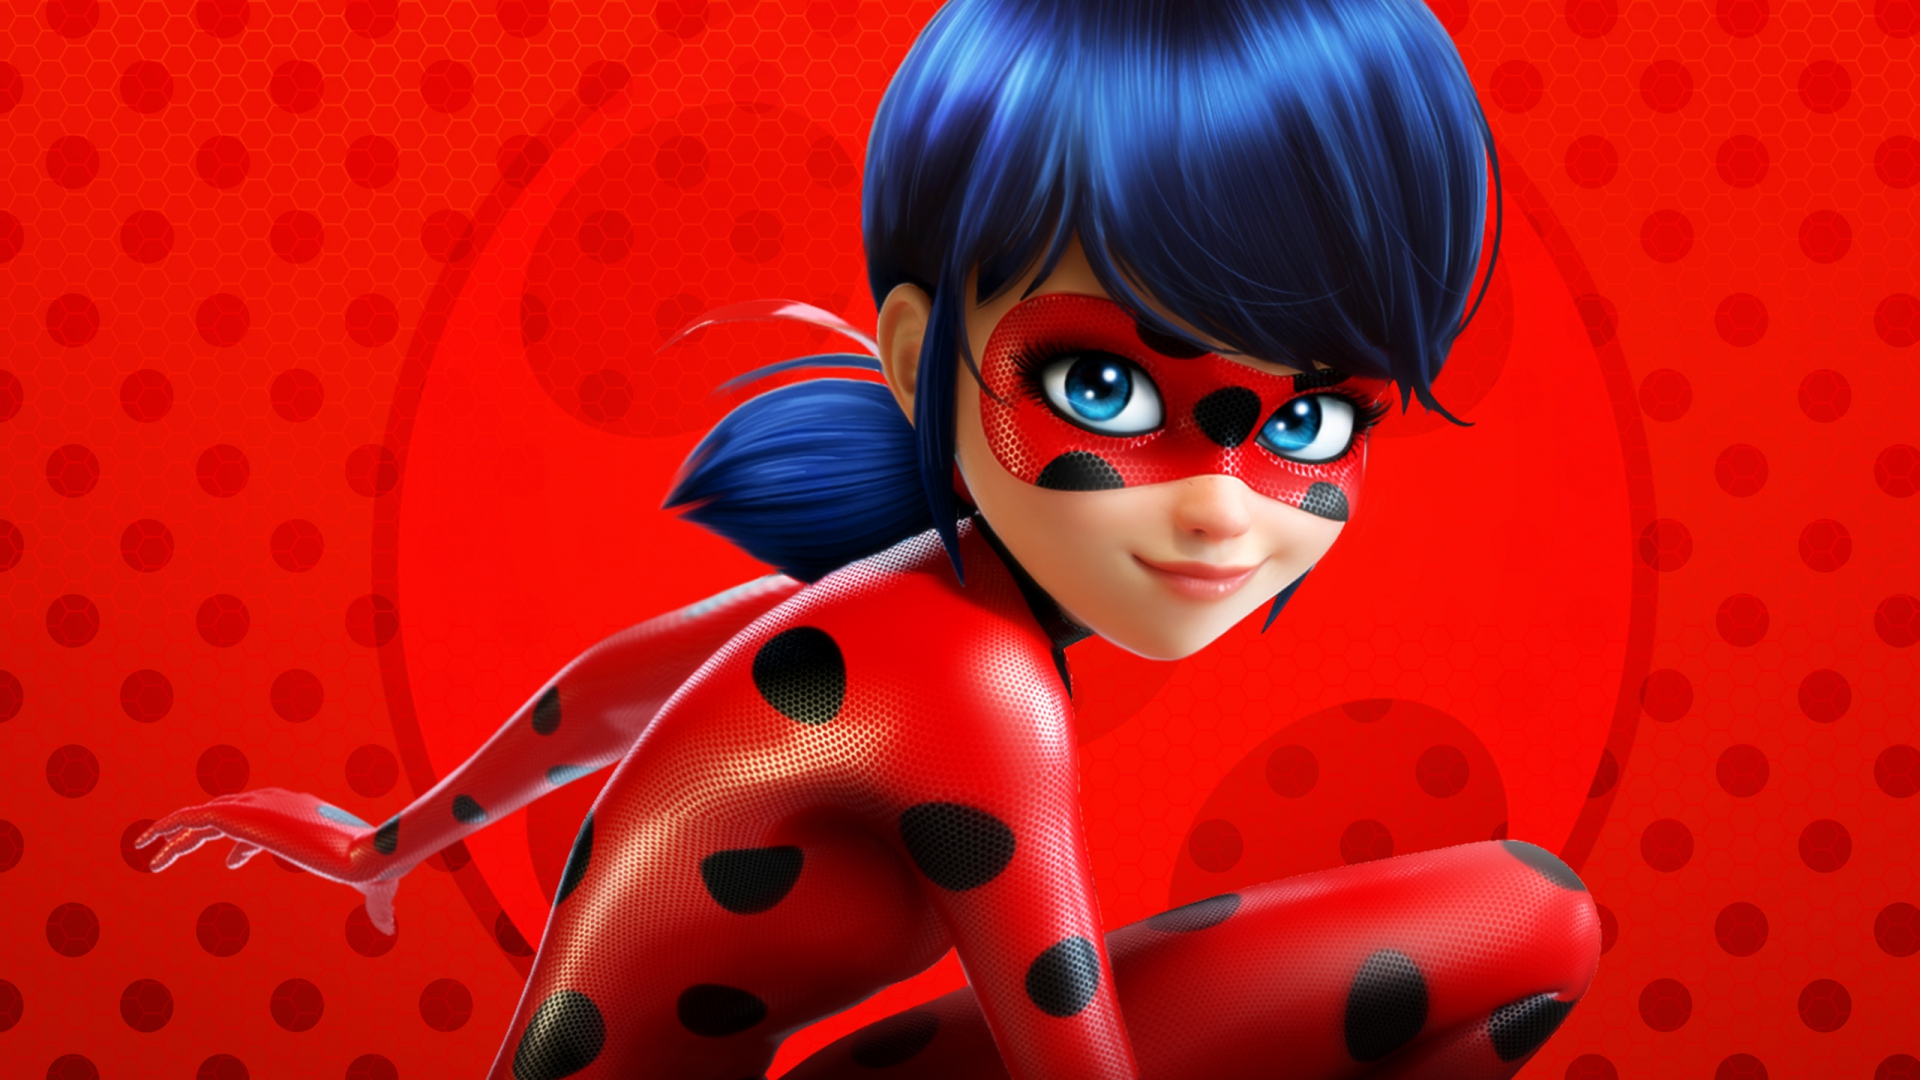 miraculous ladybug wallpaper,red,cartoon,fictional character,illustration,animated cartoon